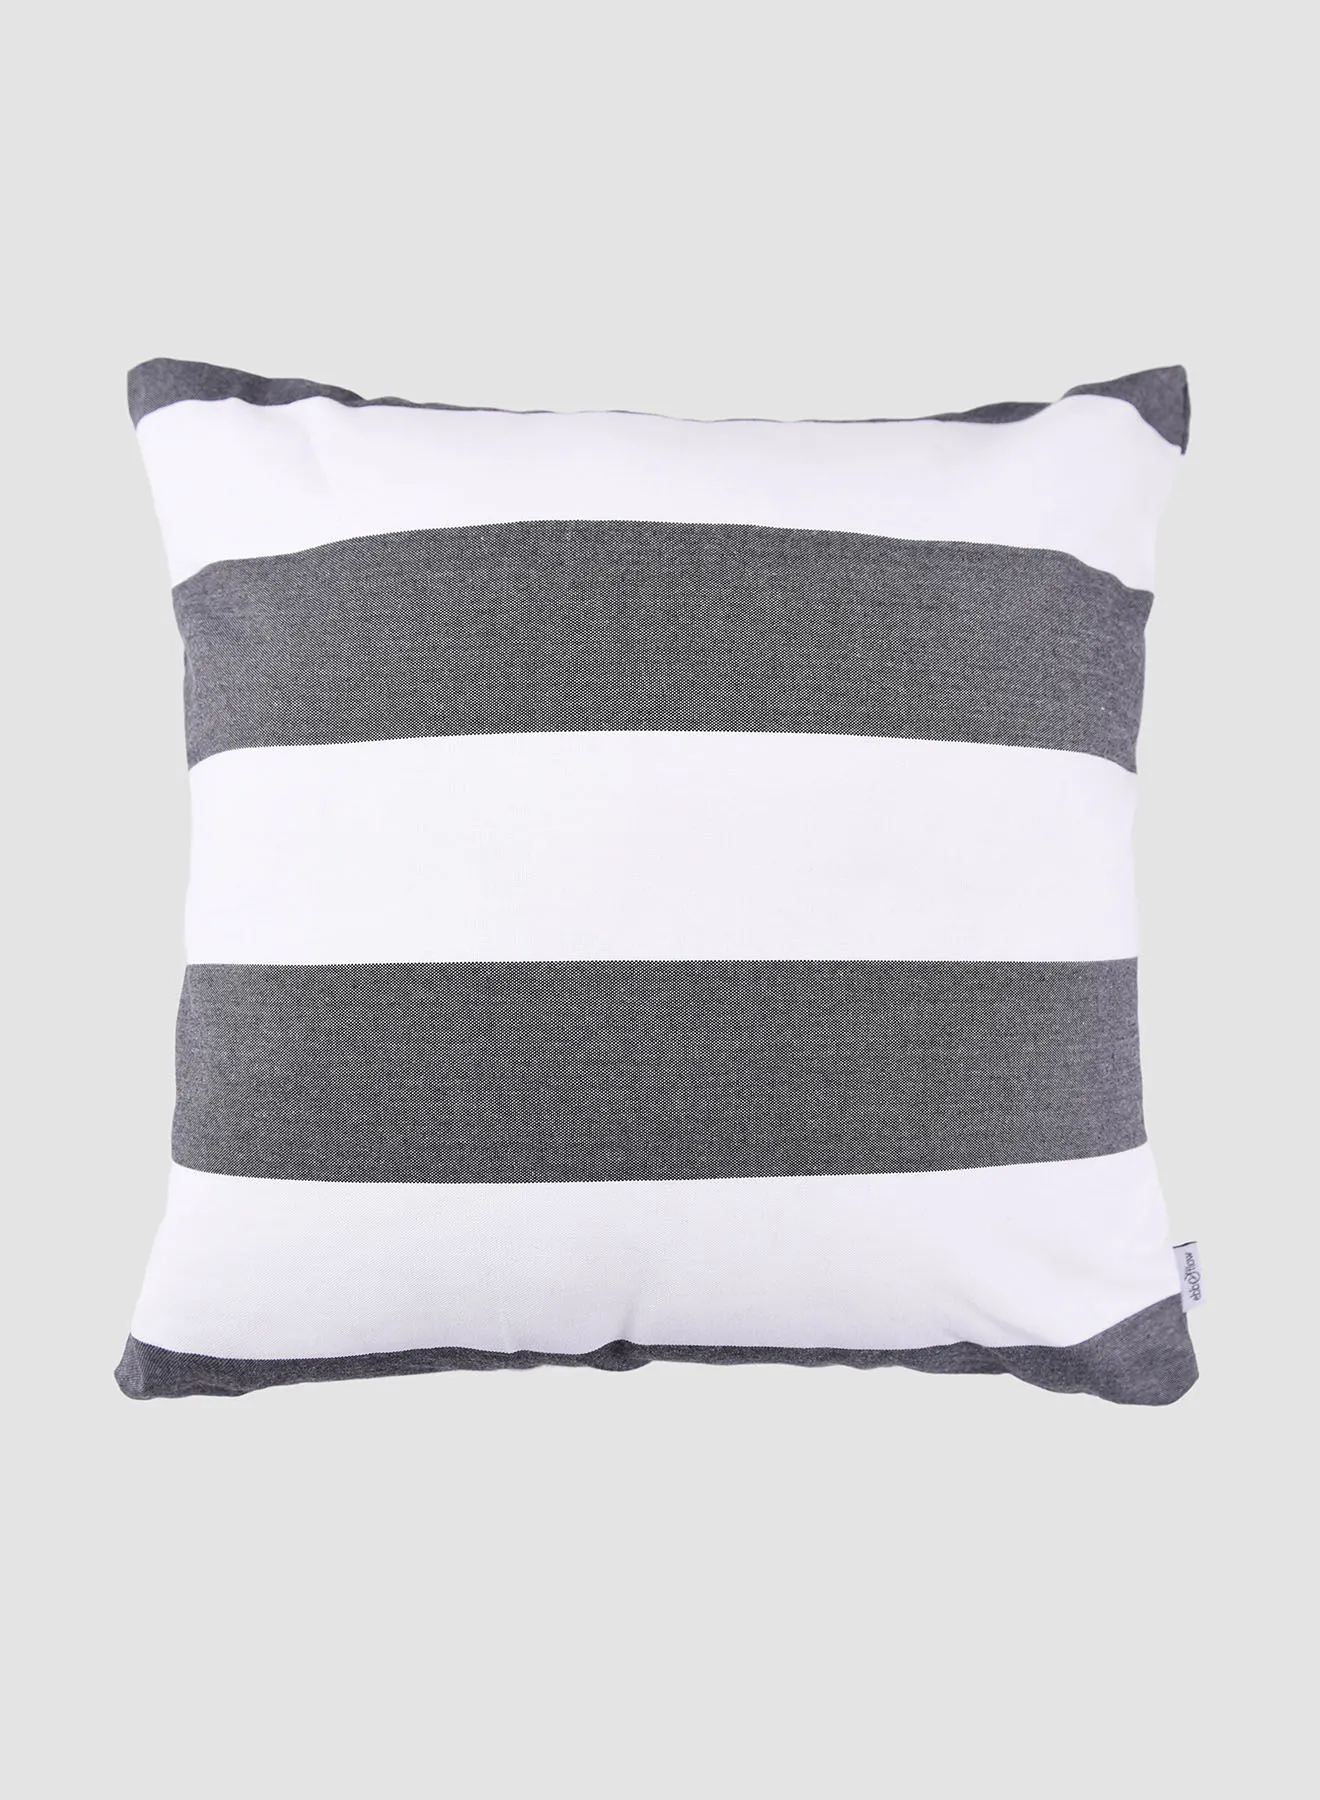 ebb & flow Stripes & Plaid Cushion, Unique Luxury Quality Decor Items for the Perfect Stylish Home Grey/Pearl White 45 x 45cm